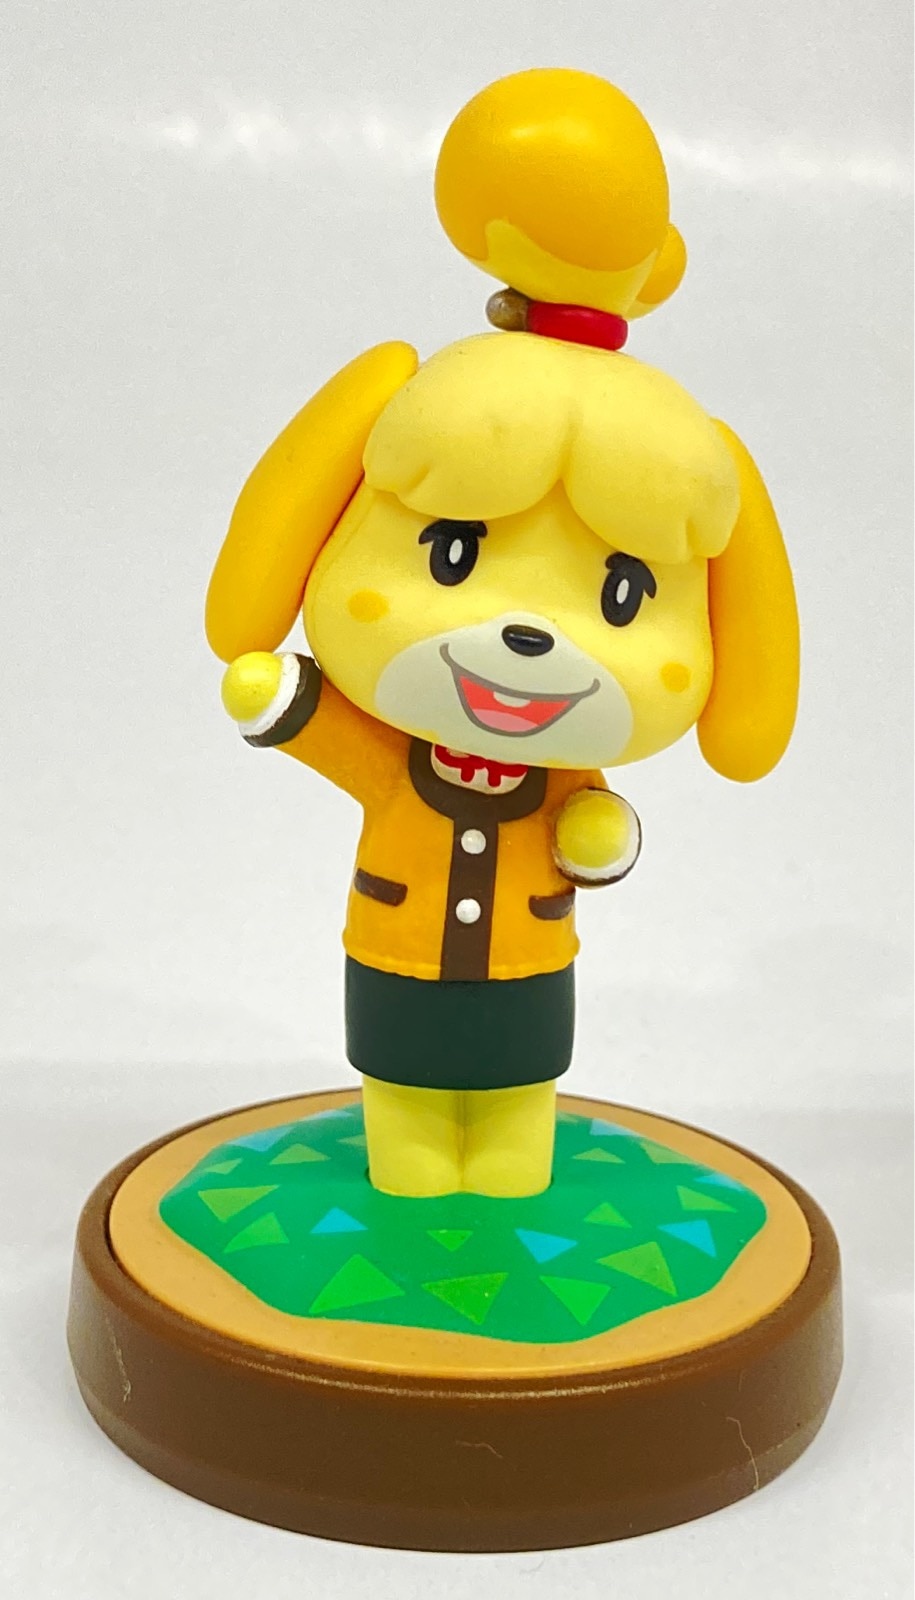 Amiibo Animal Crossing Isabelle